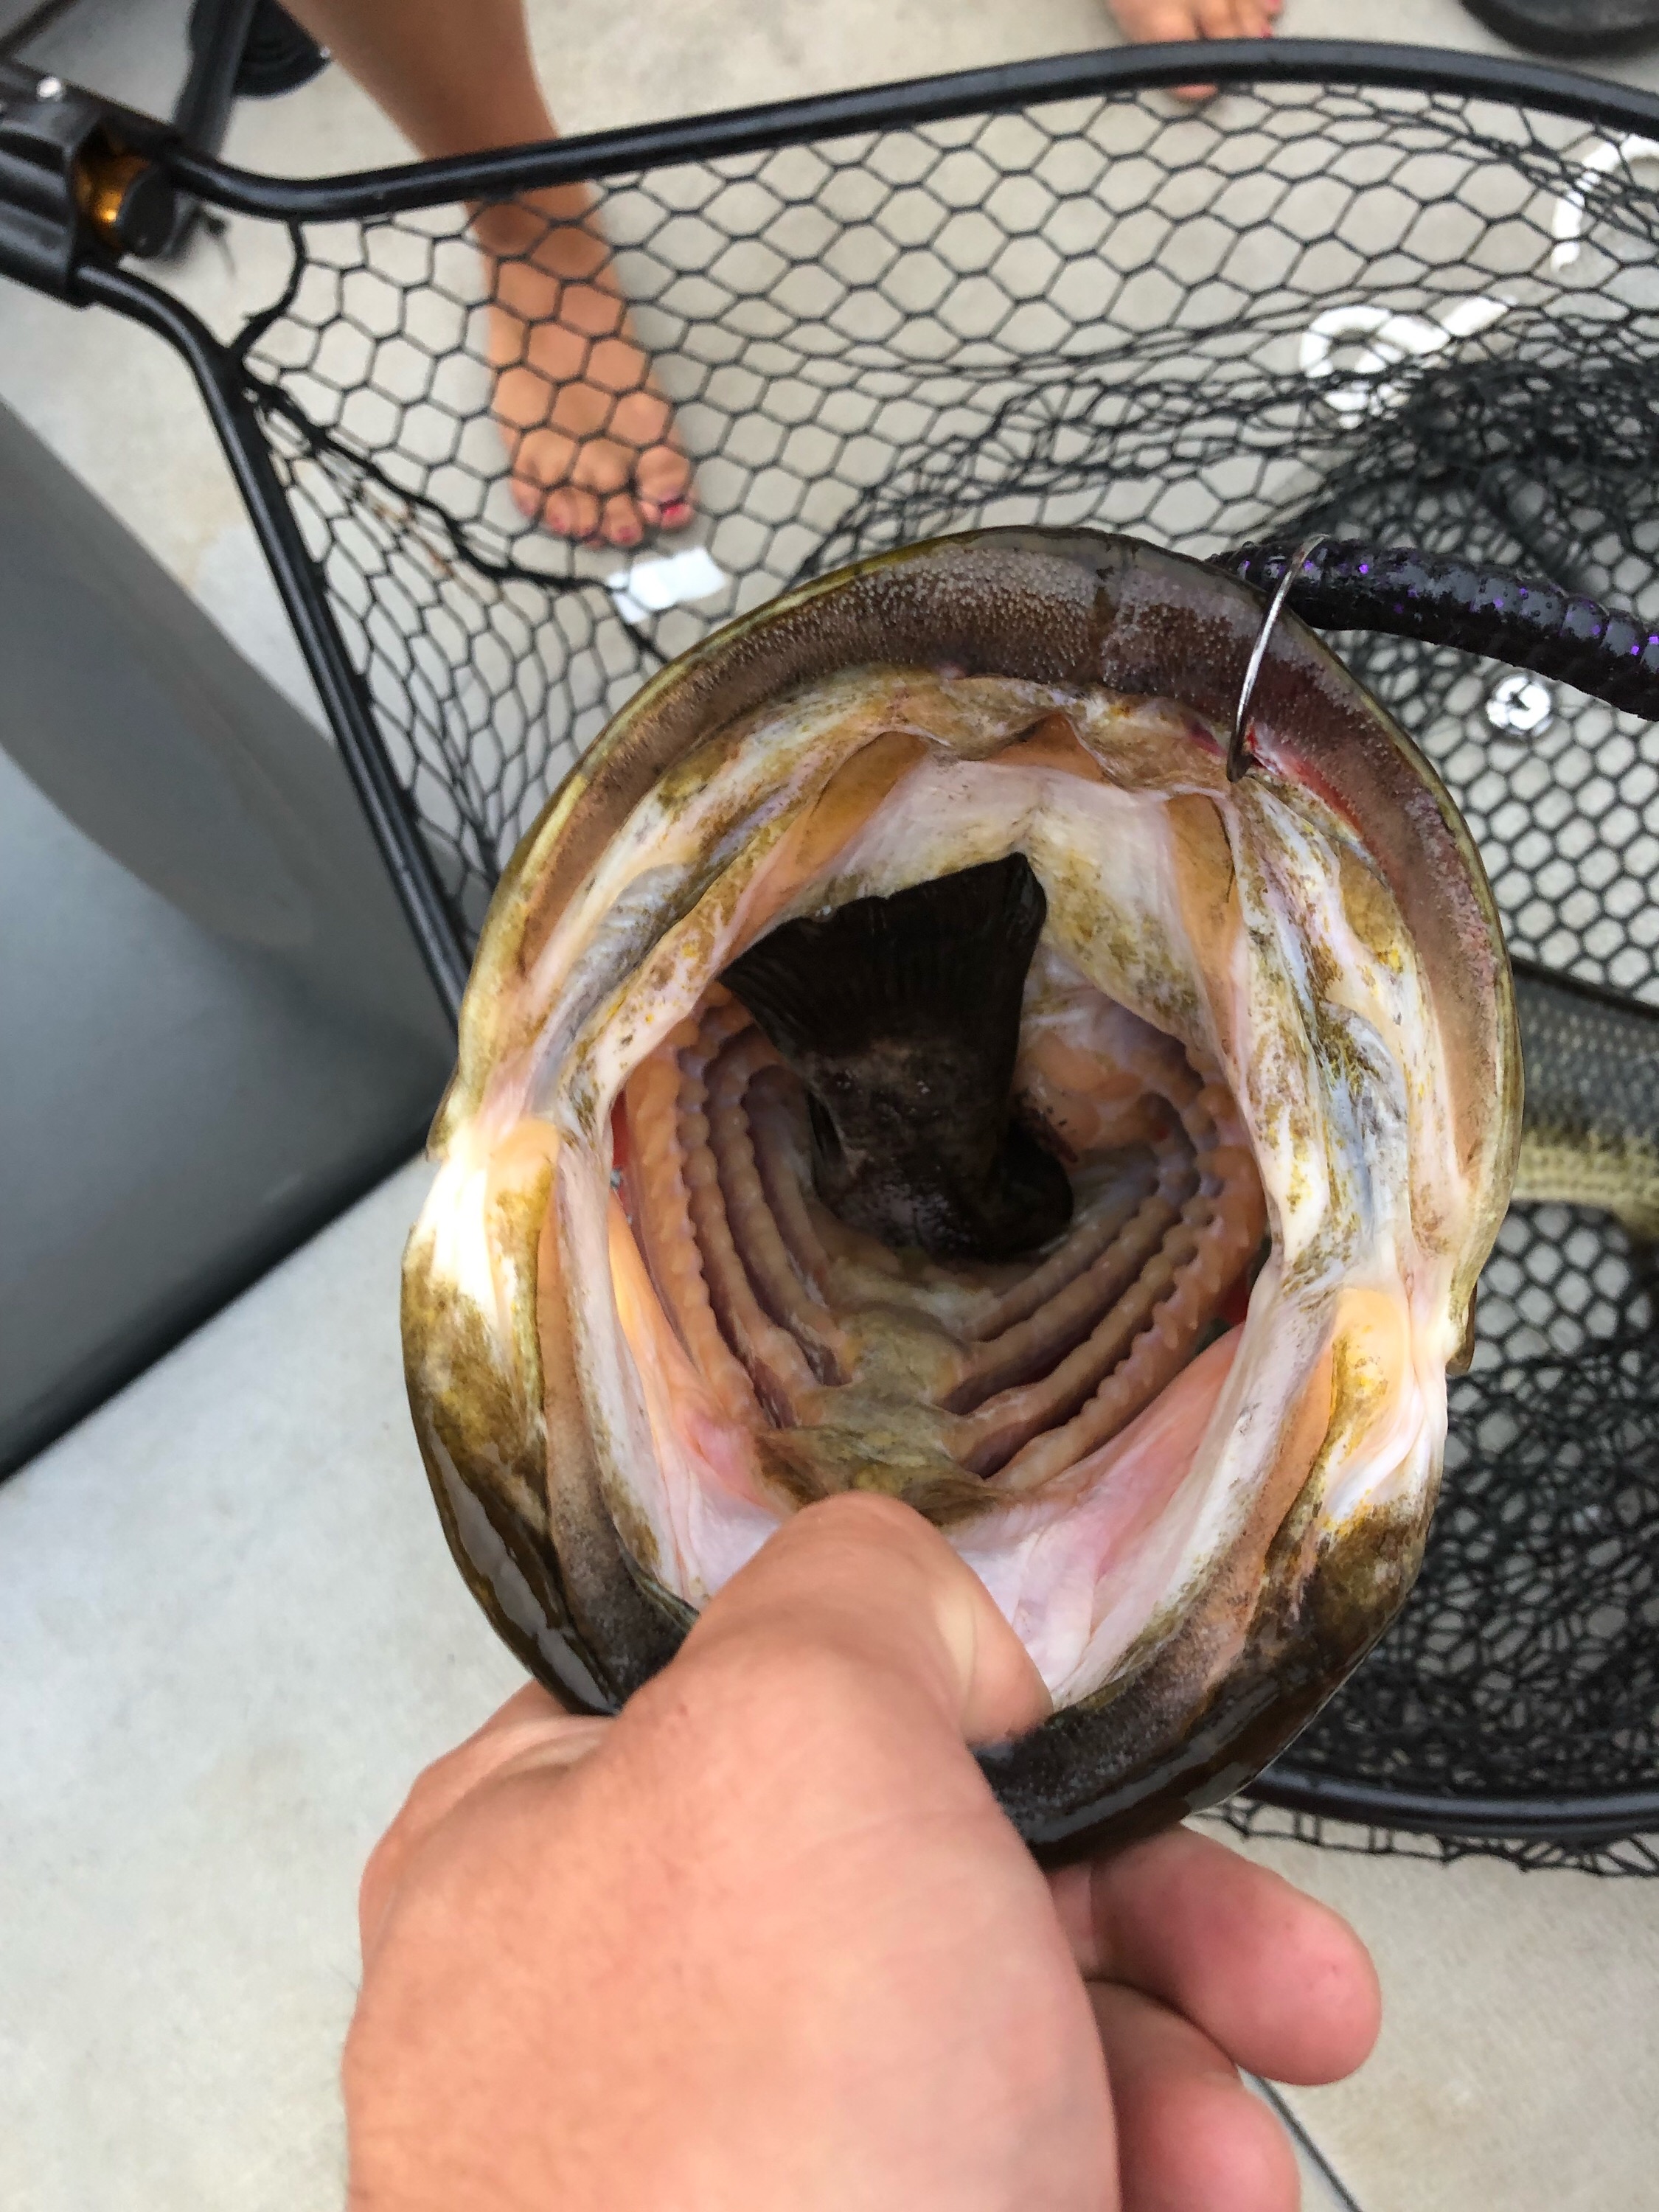 mini pop-r, crickhoppers, rebel crawfish for bluegill? - Other Fish Species  - Bass Fishing Forums